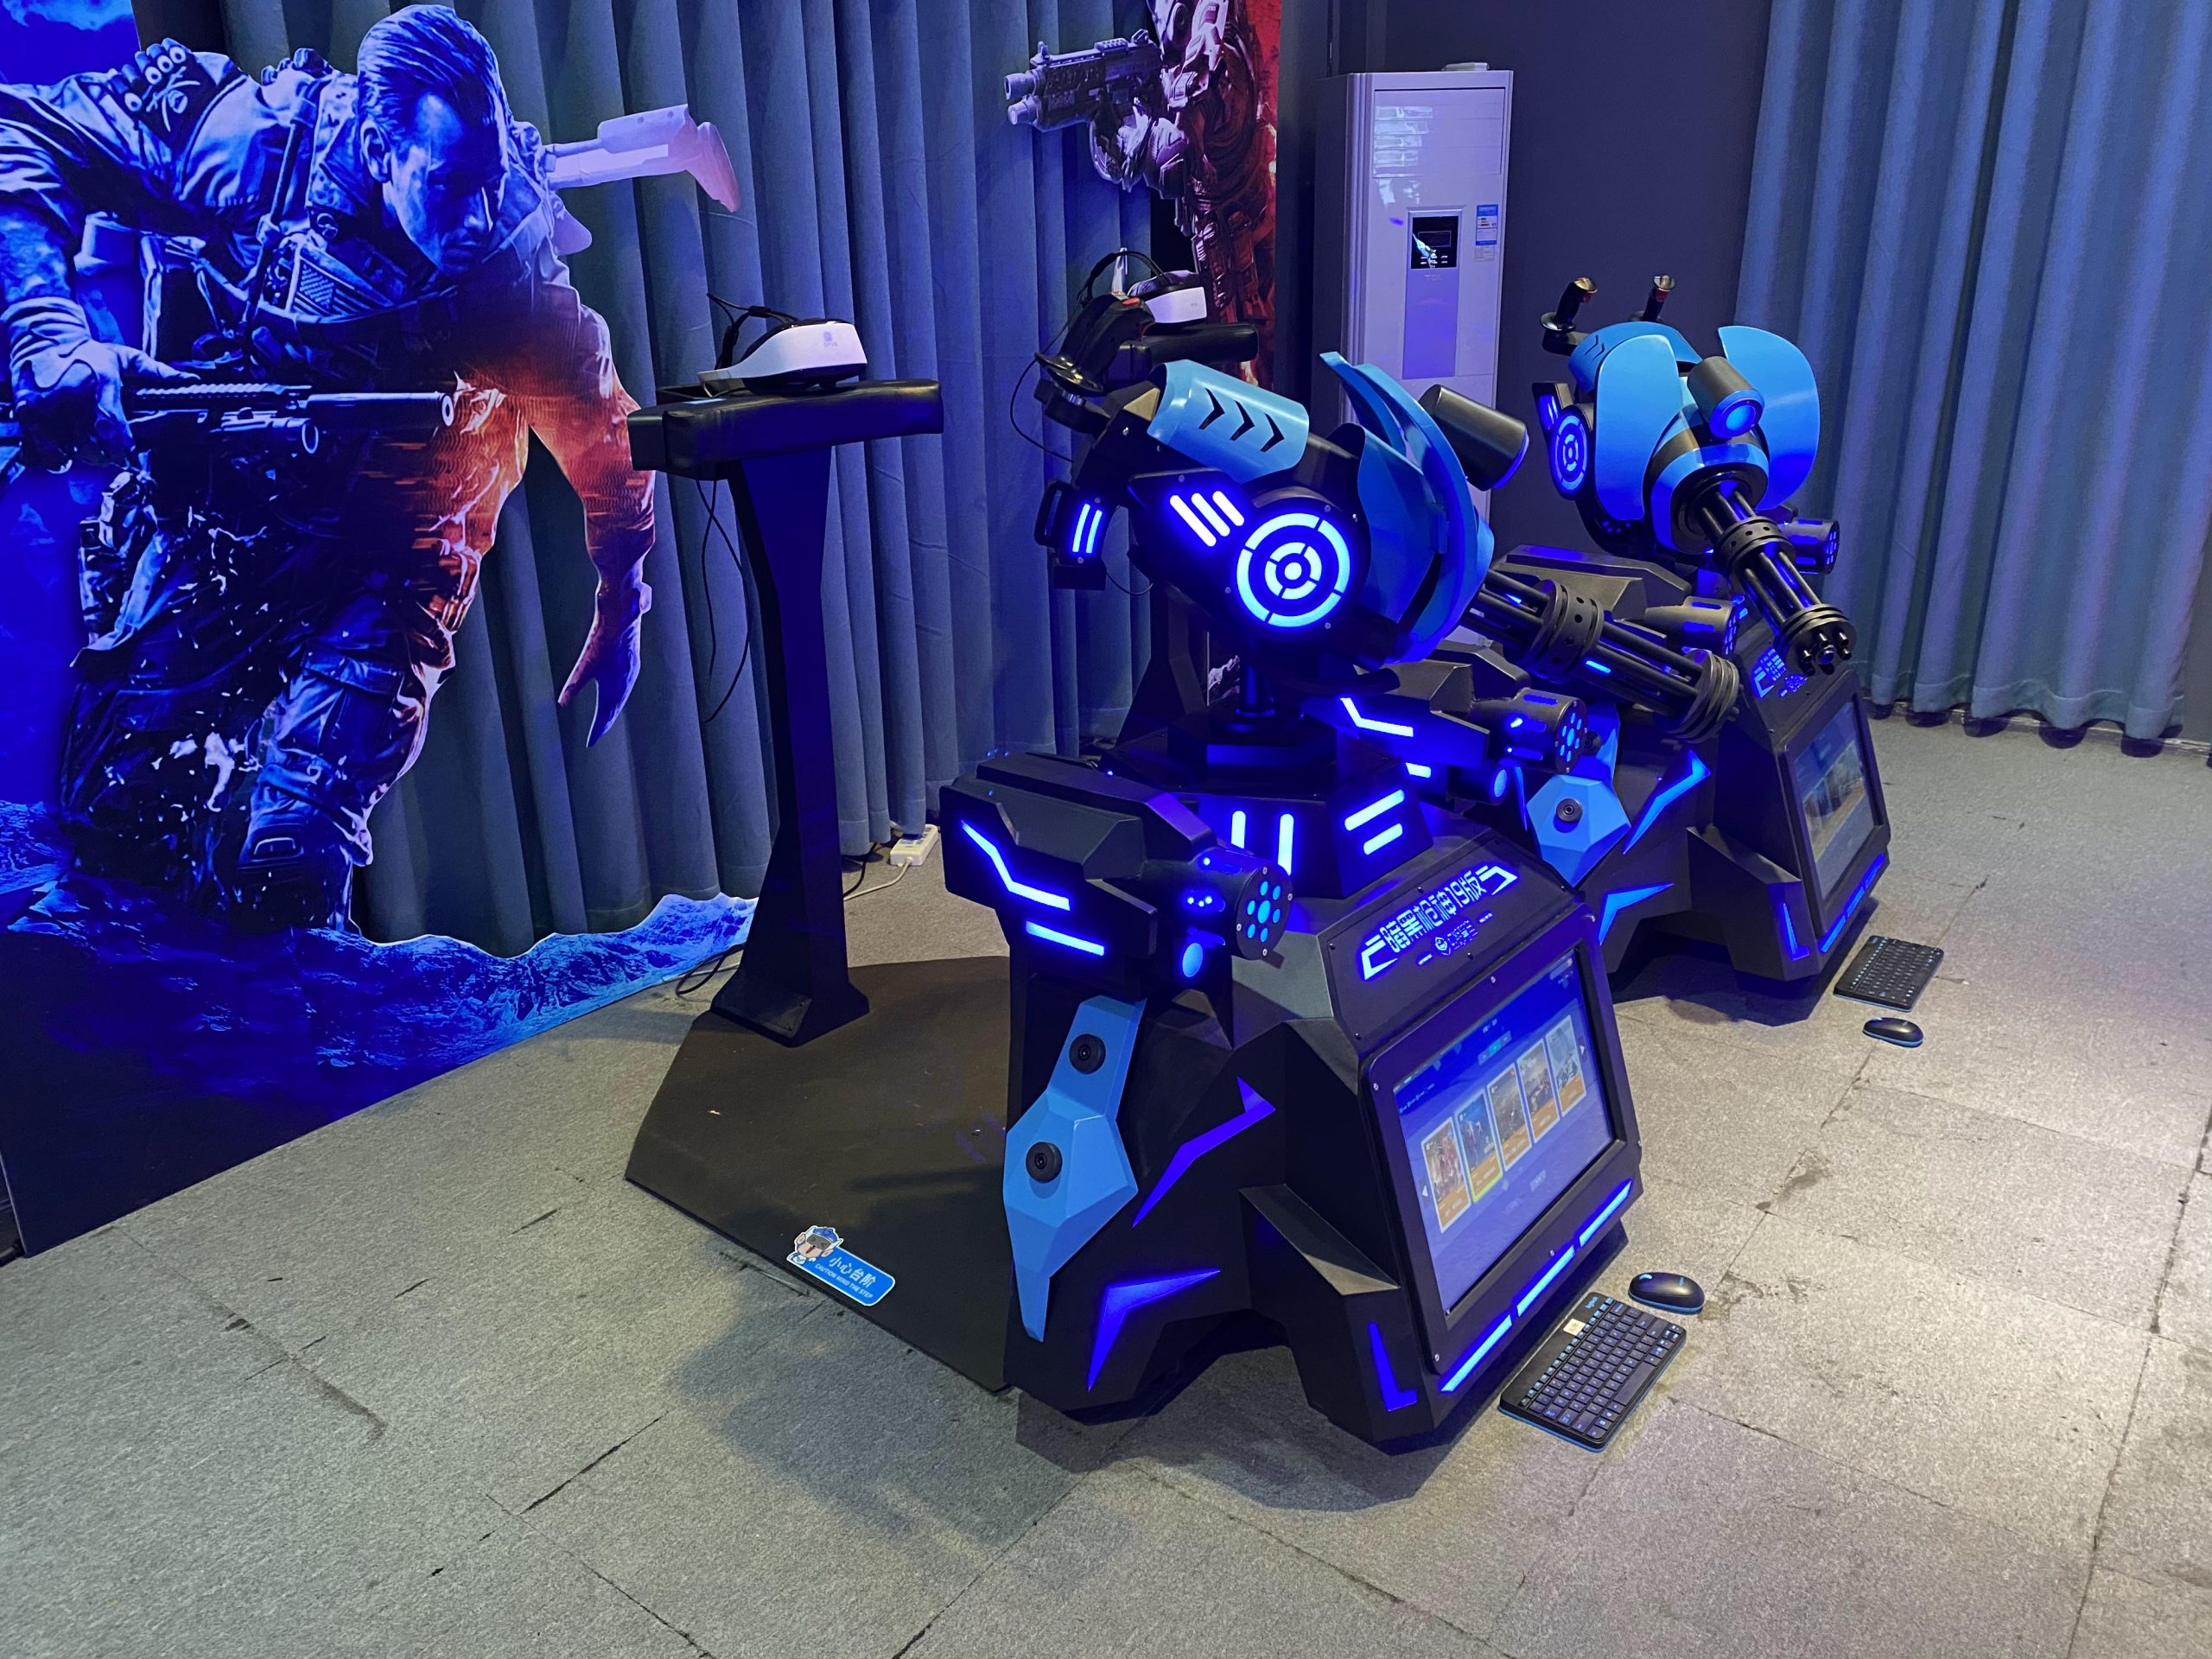 2022 VR Shooting Simulator Game|VR Gun Game Arcade|Virtual Games For Theme Park